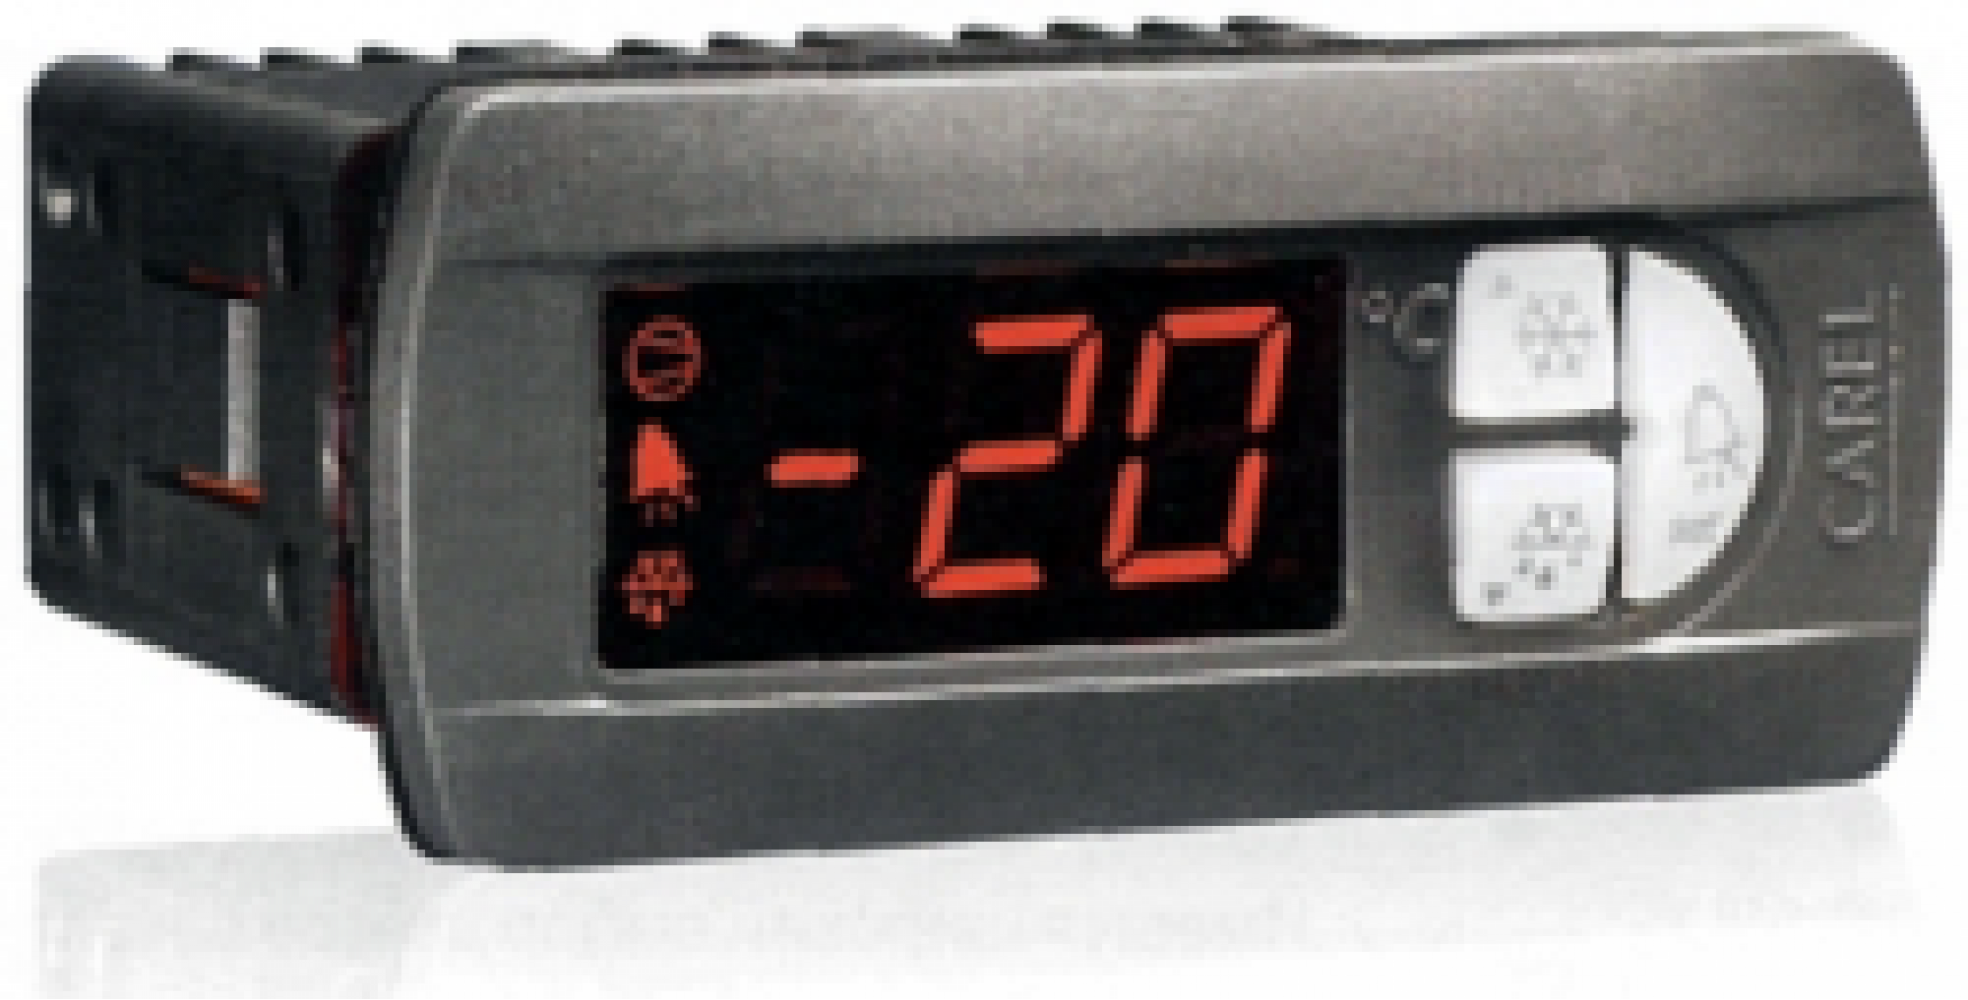 IREVC0LE20 Контроллер IR33+power, питание 12-24В АС, 2 датчика NTC, 2 цифровых входа, RTC,звуковой сигнал, 4 реле: компрессор, разморозка, вентилятор, опц.